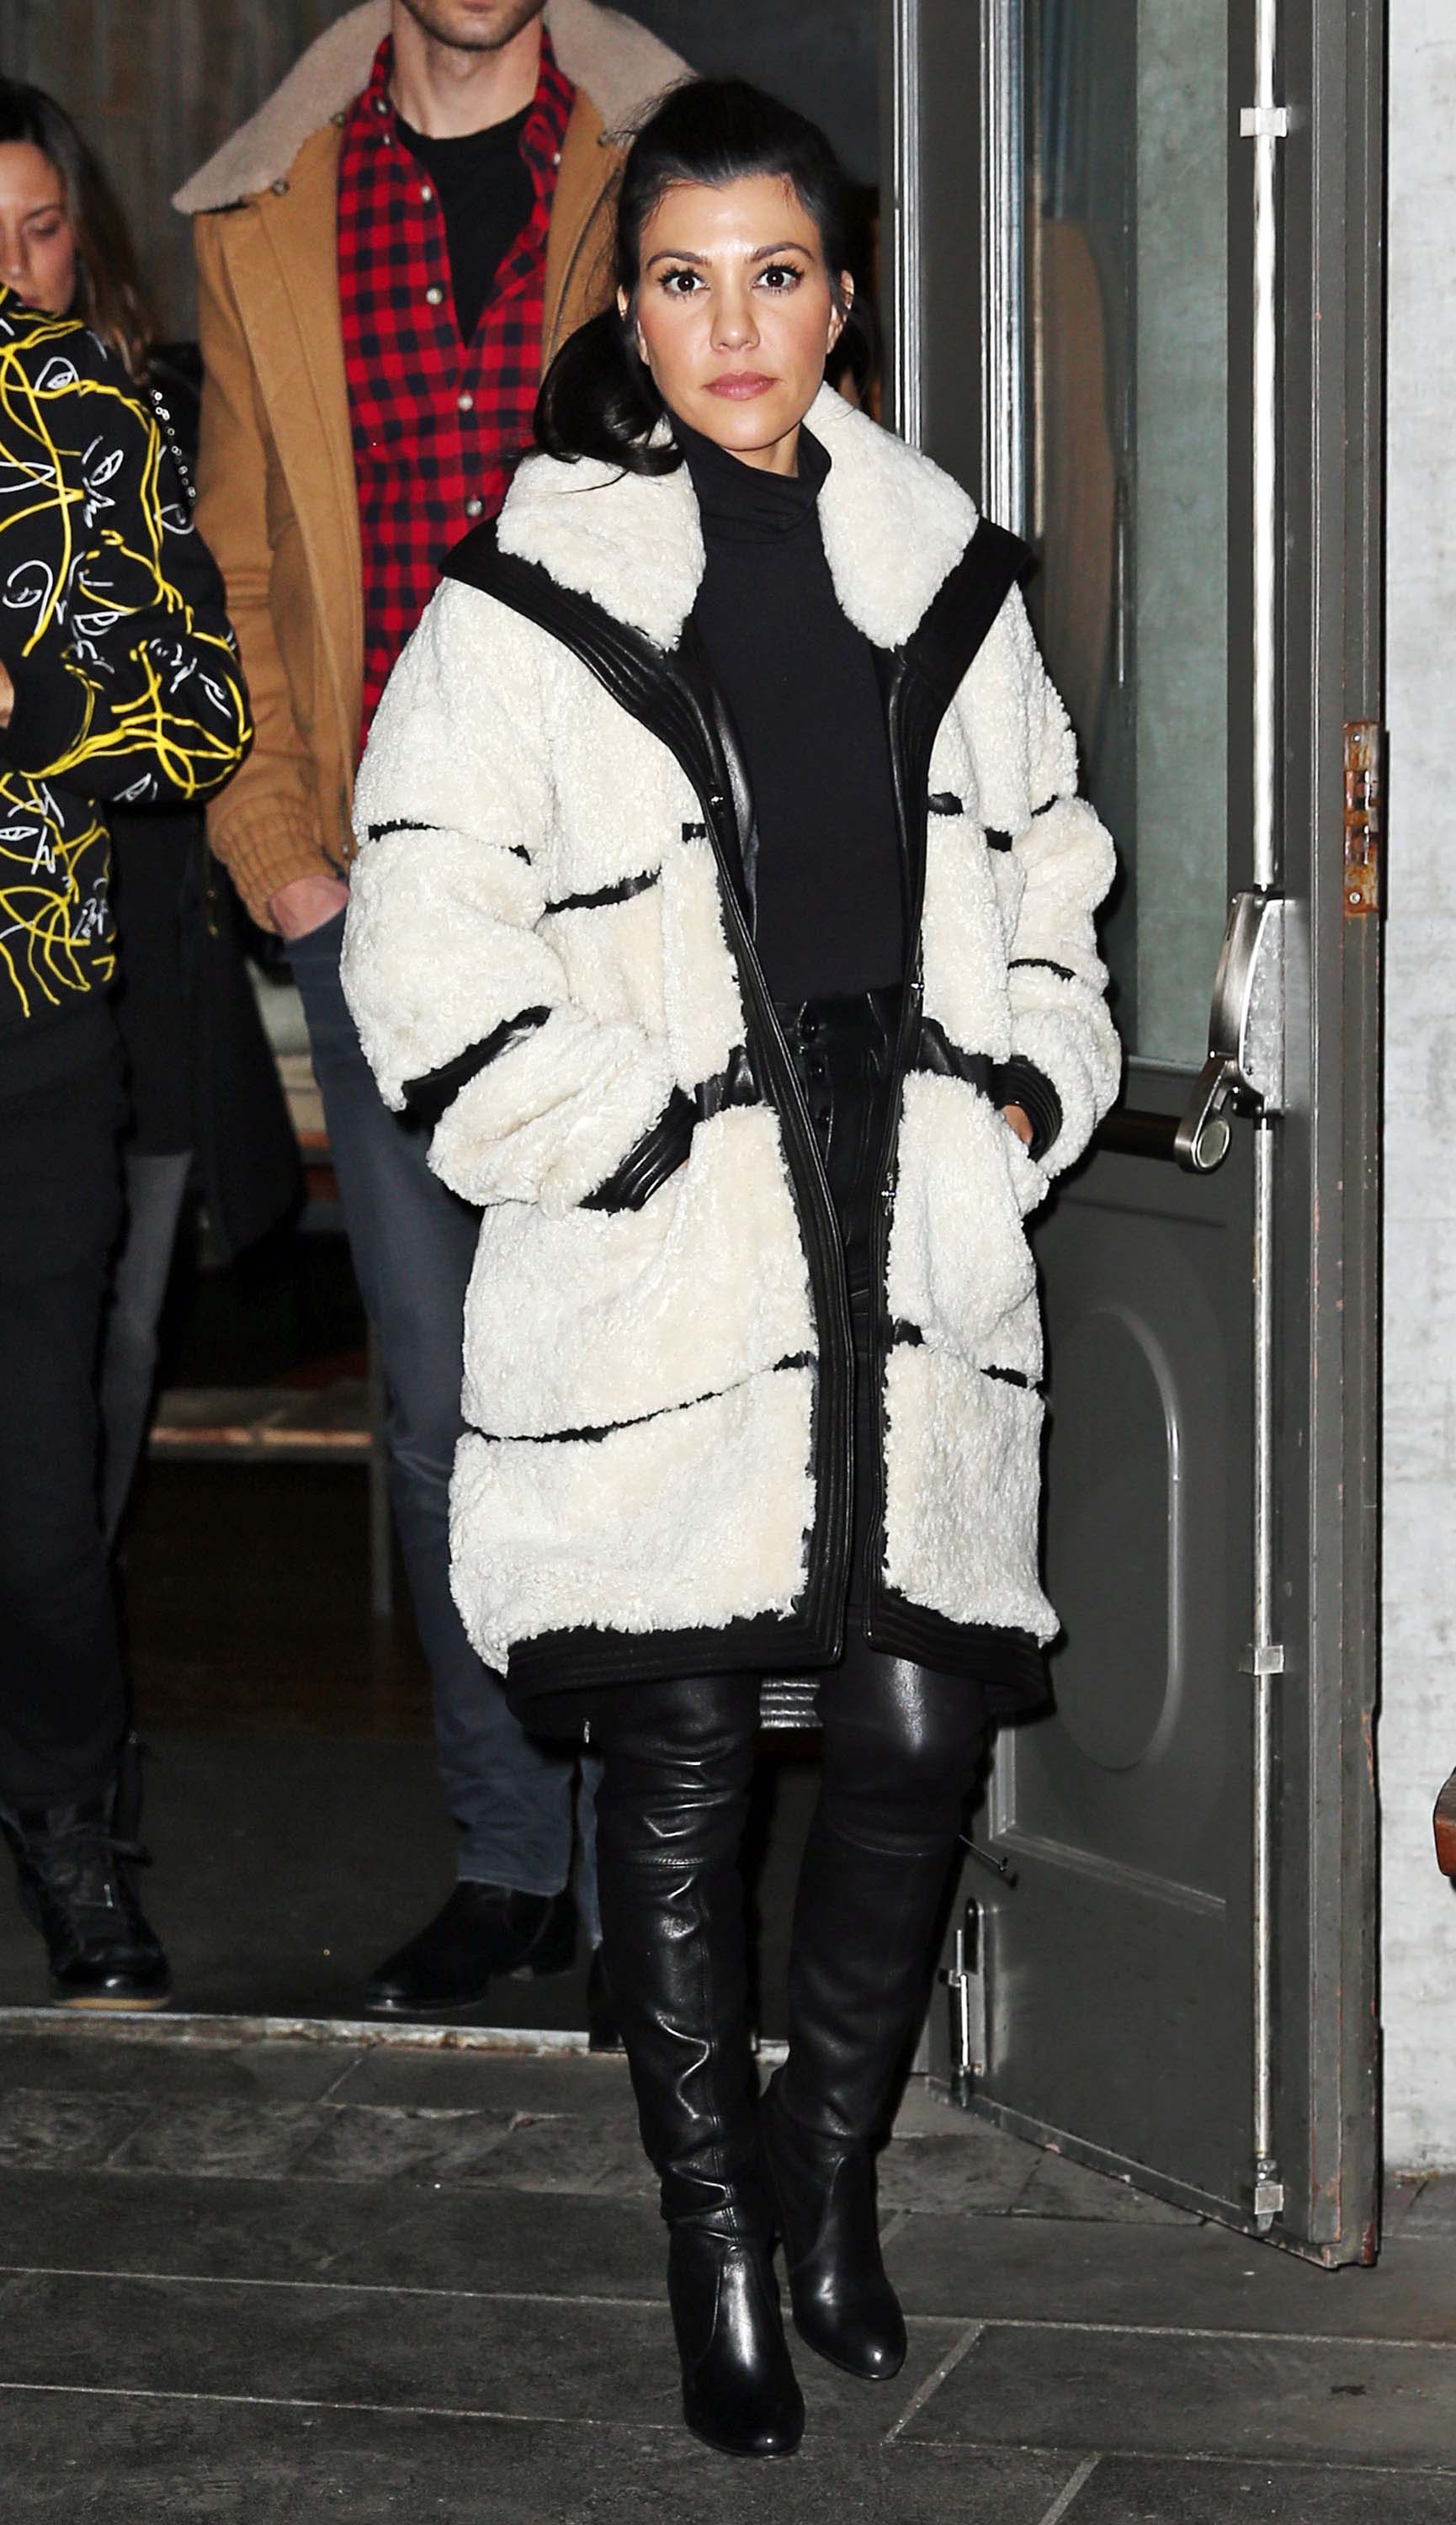 Kourtney Kardashian leaving a restaurant in Iceland